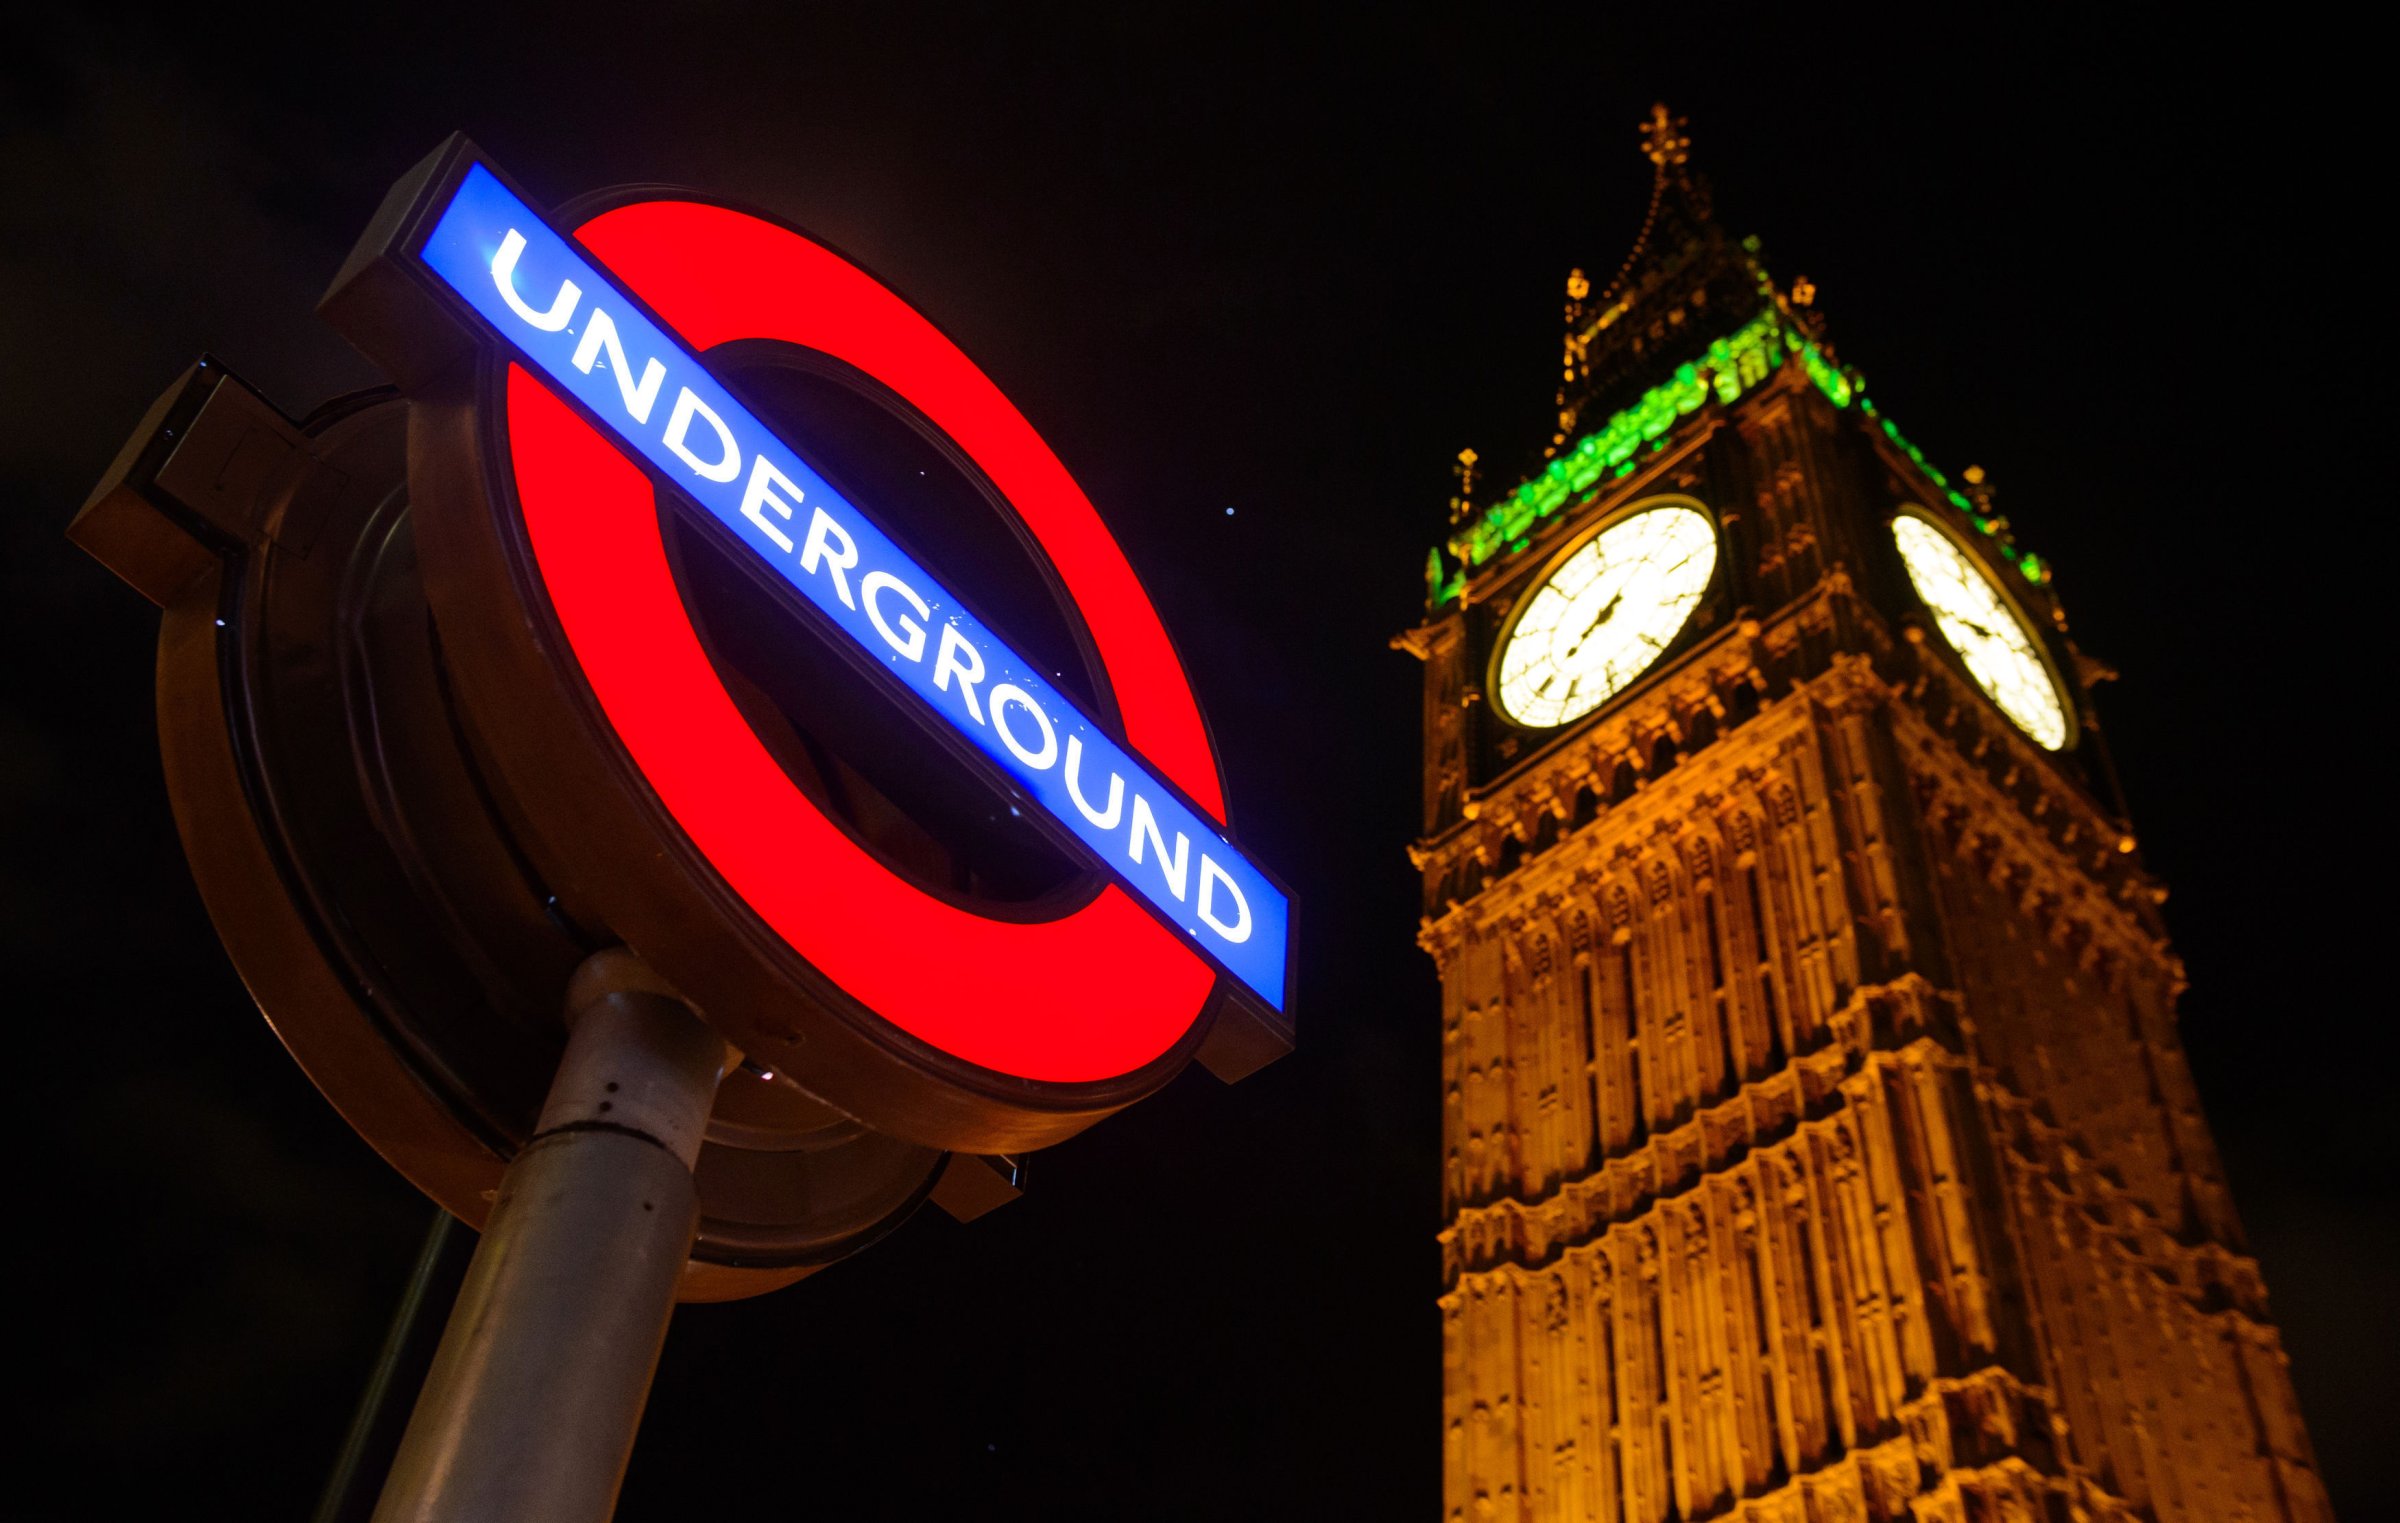 london tube strike underground